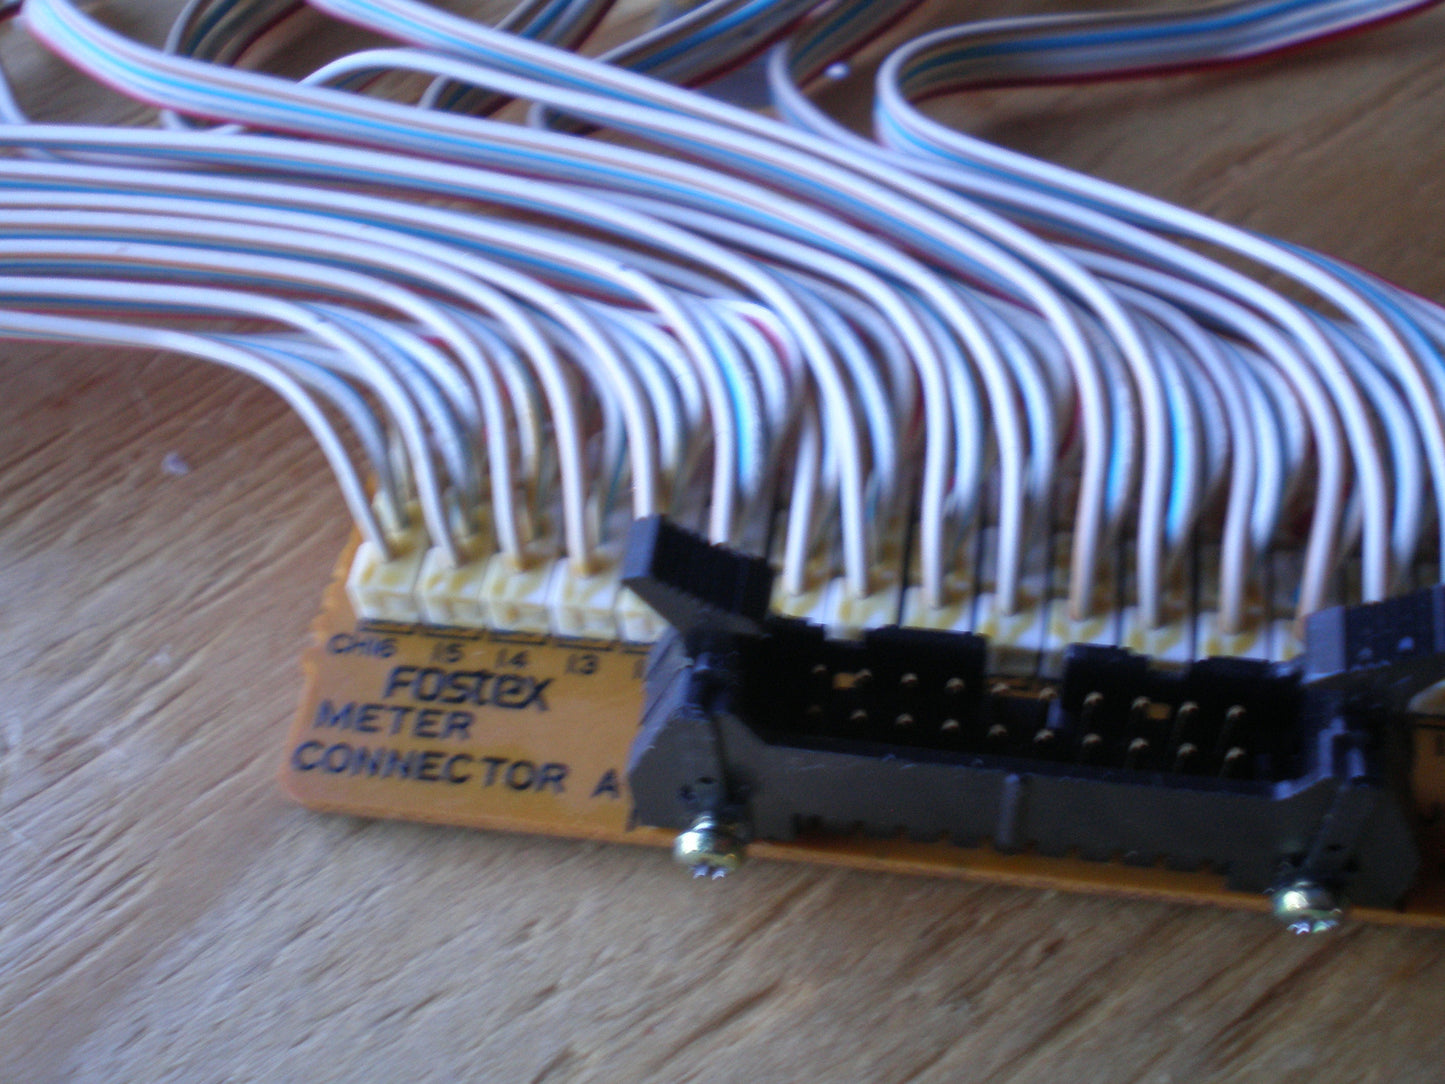 Fostex B16 meter connector lead 8251138-105